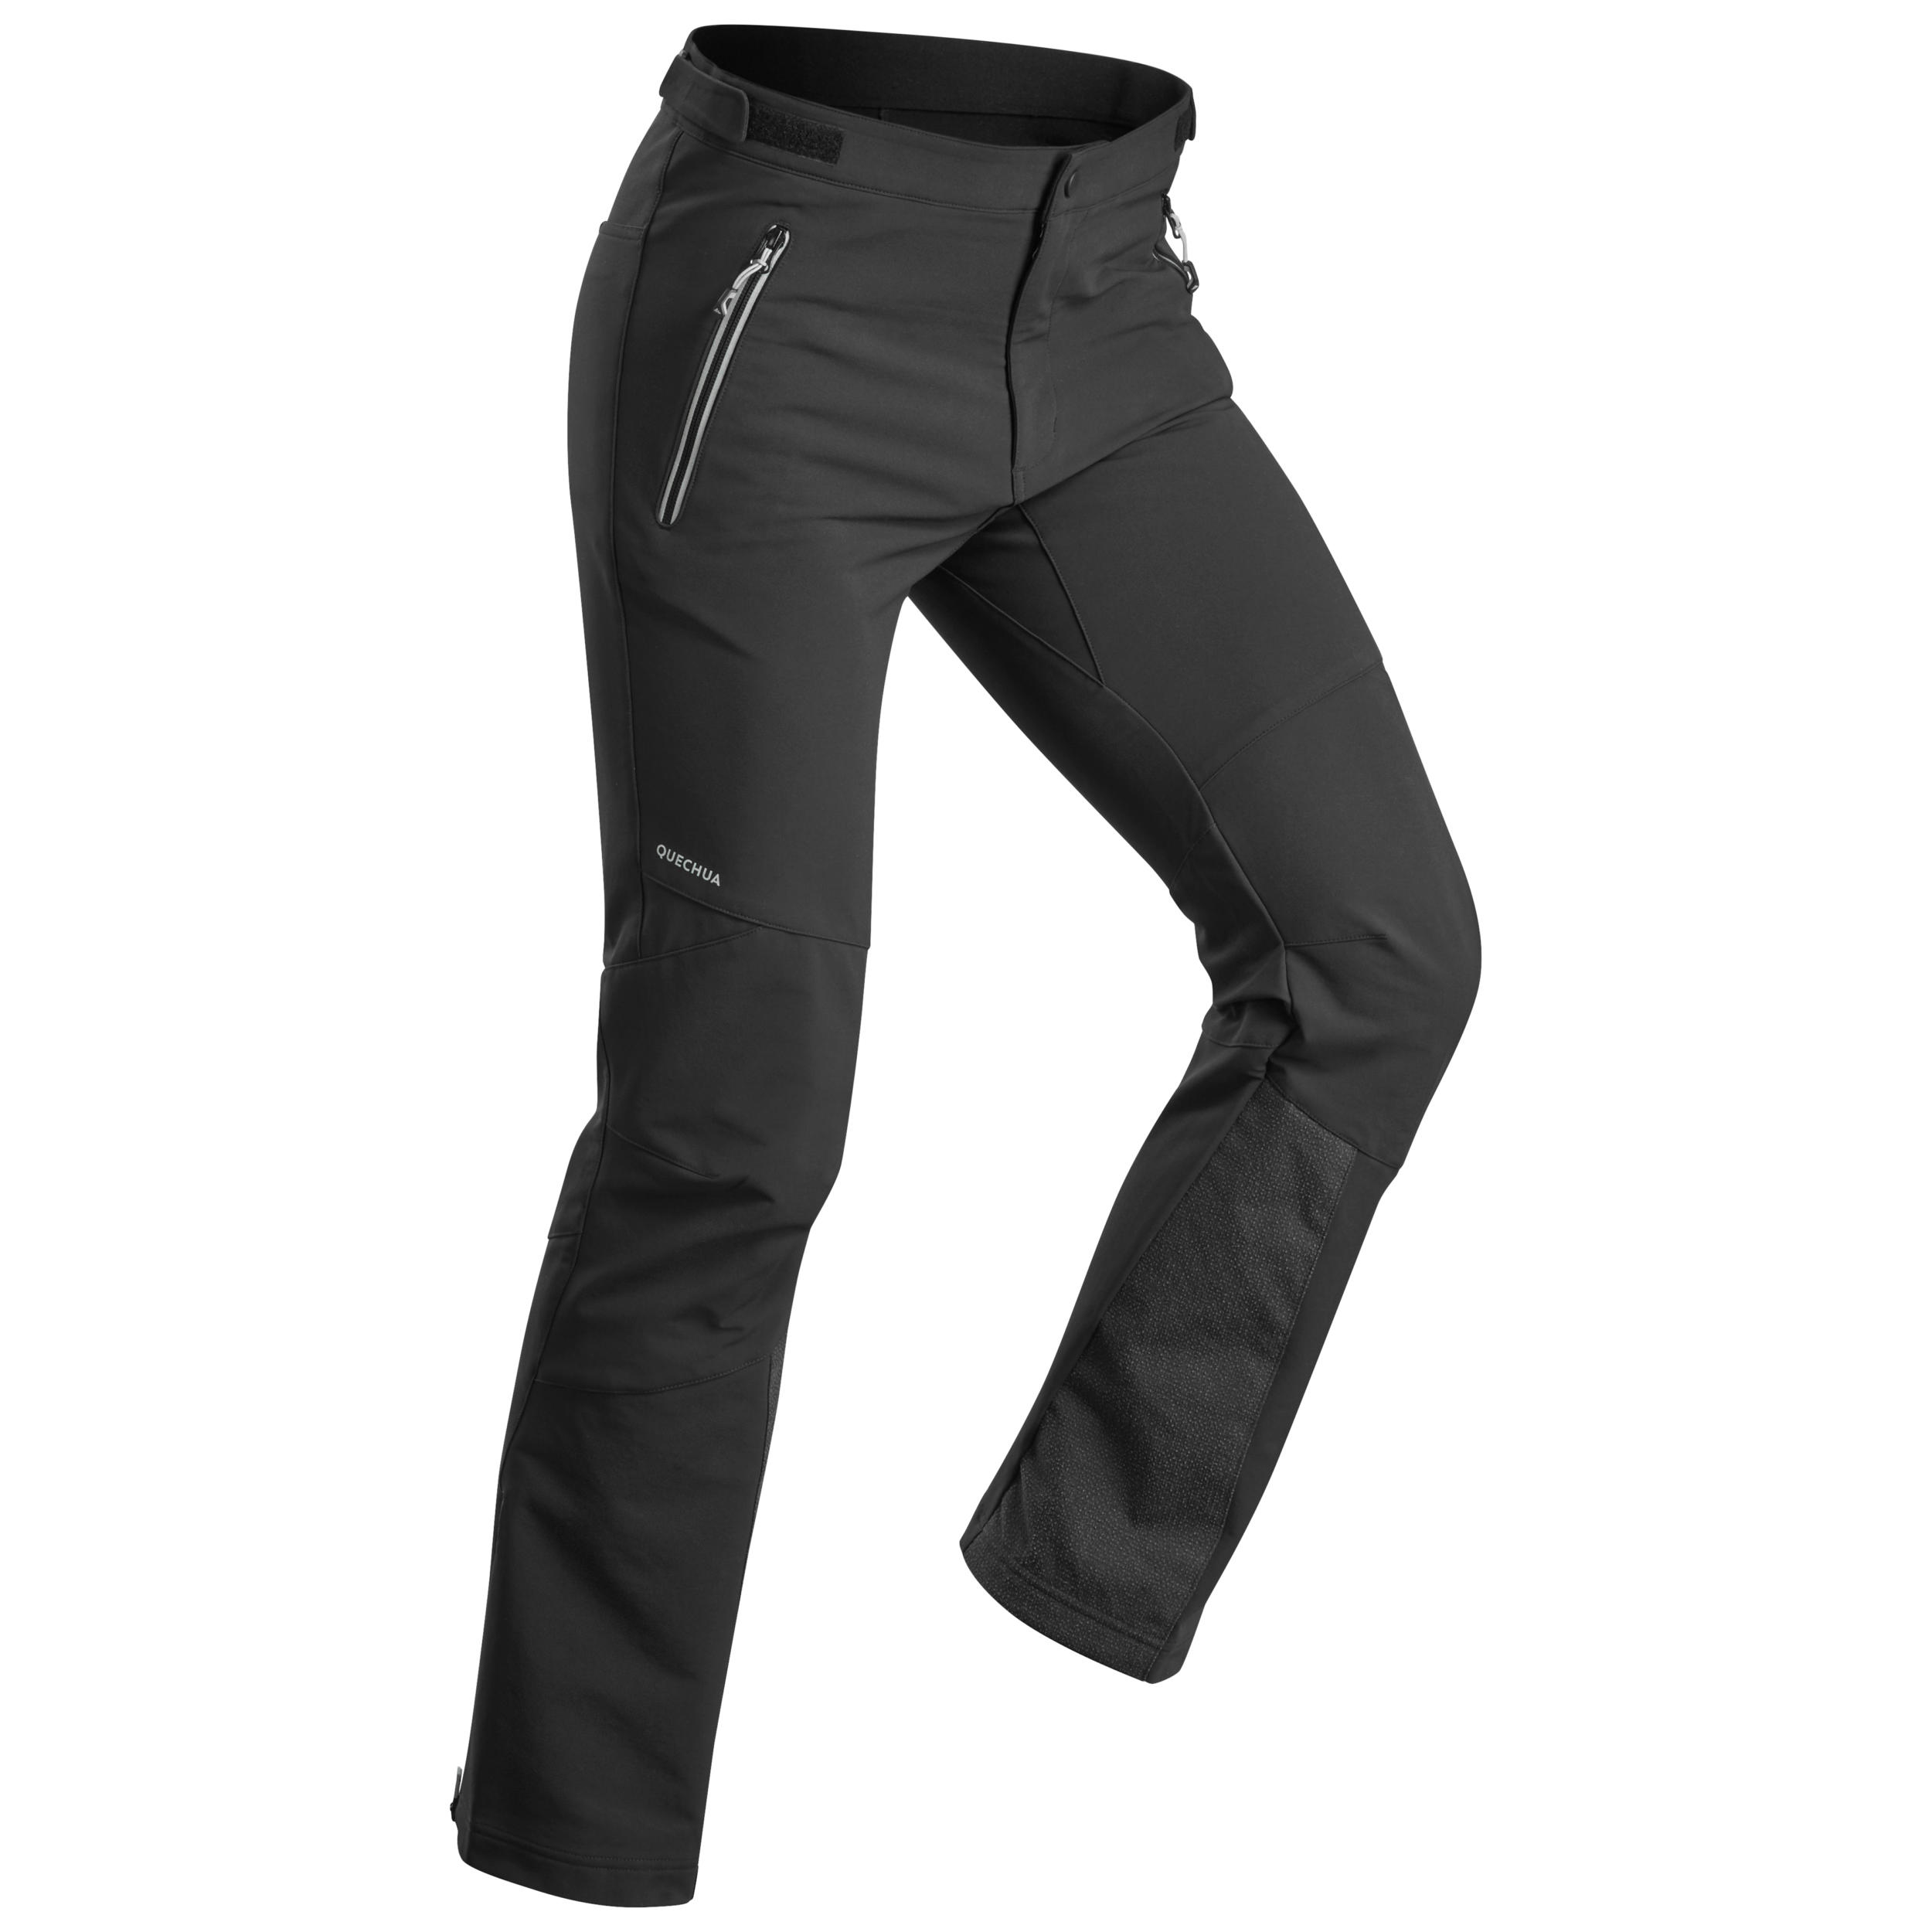 Men's Breathable Running Track Pants - BLACK